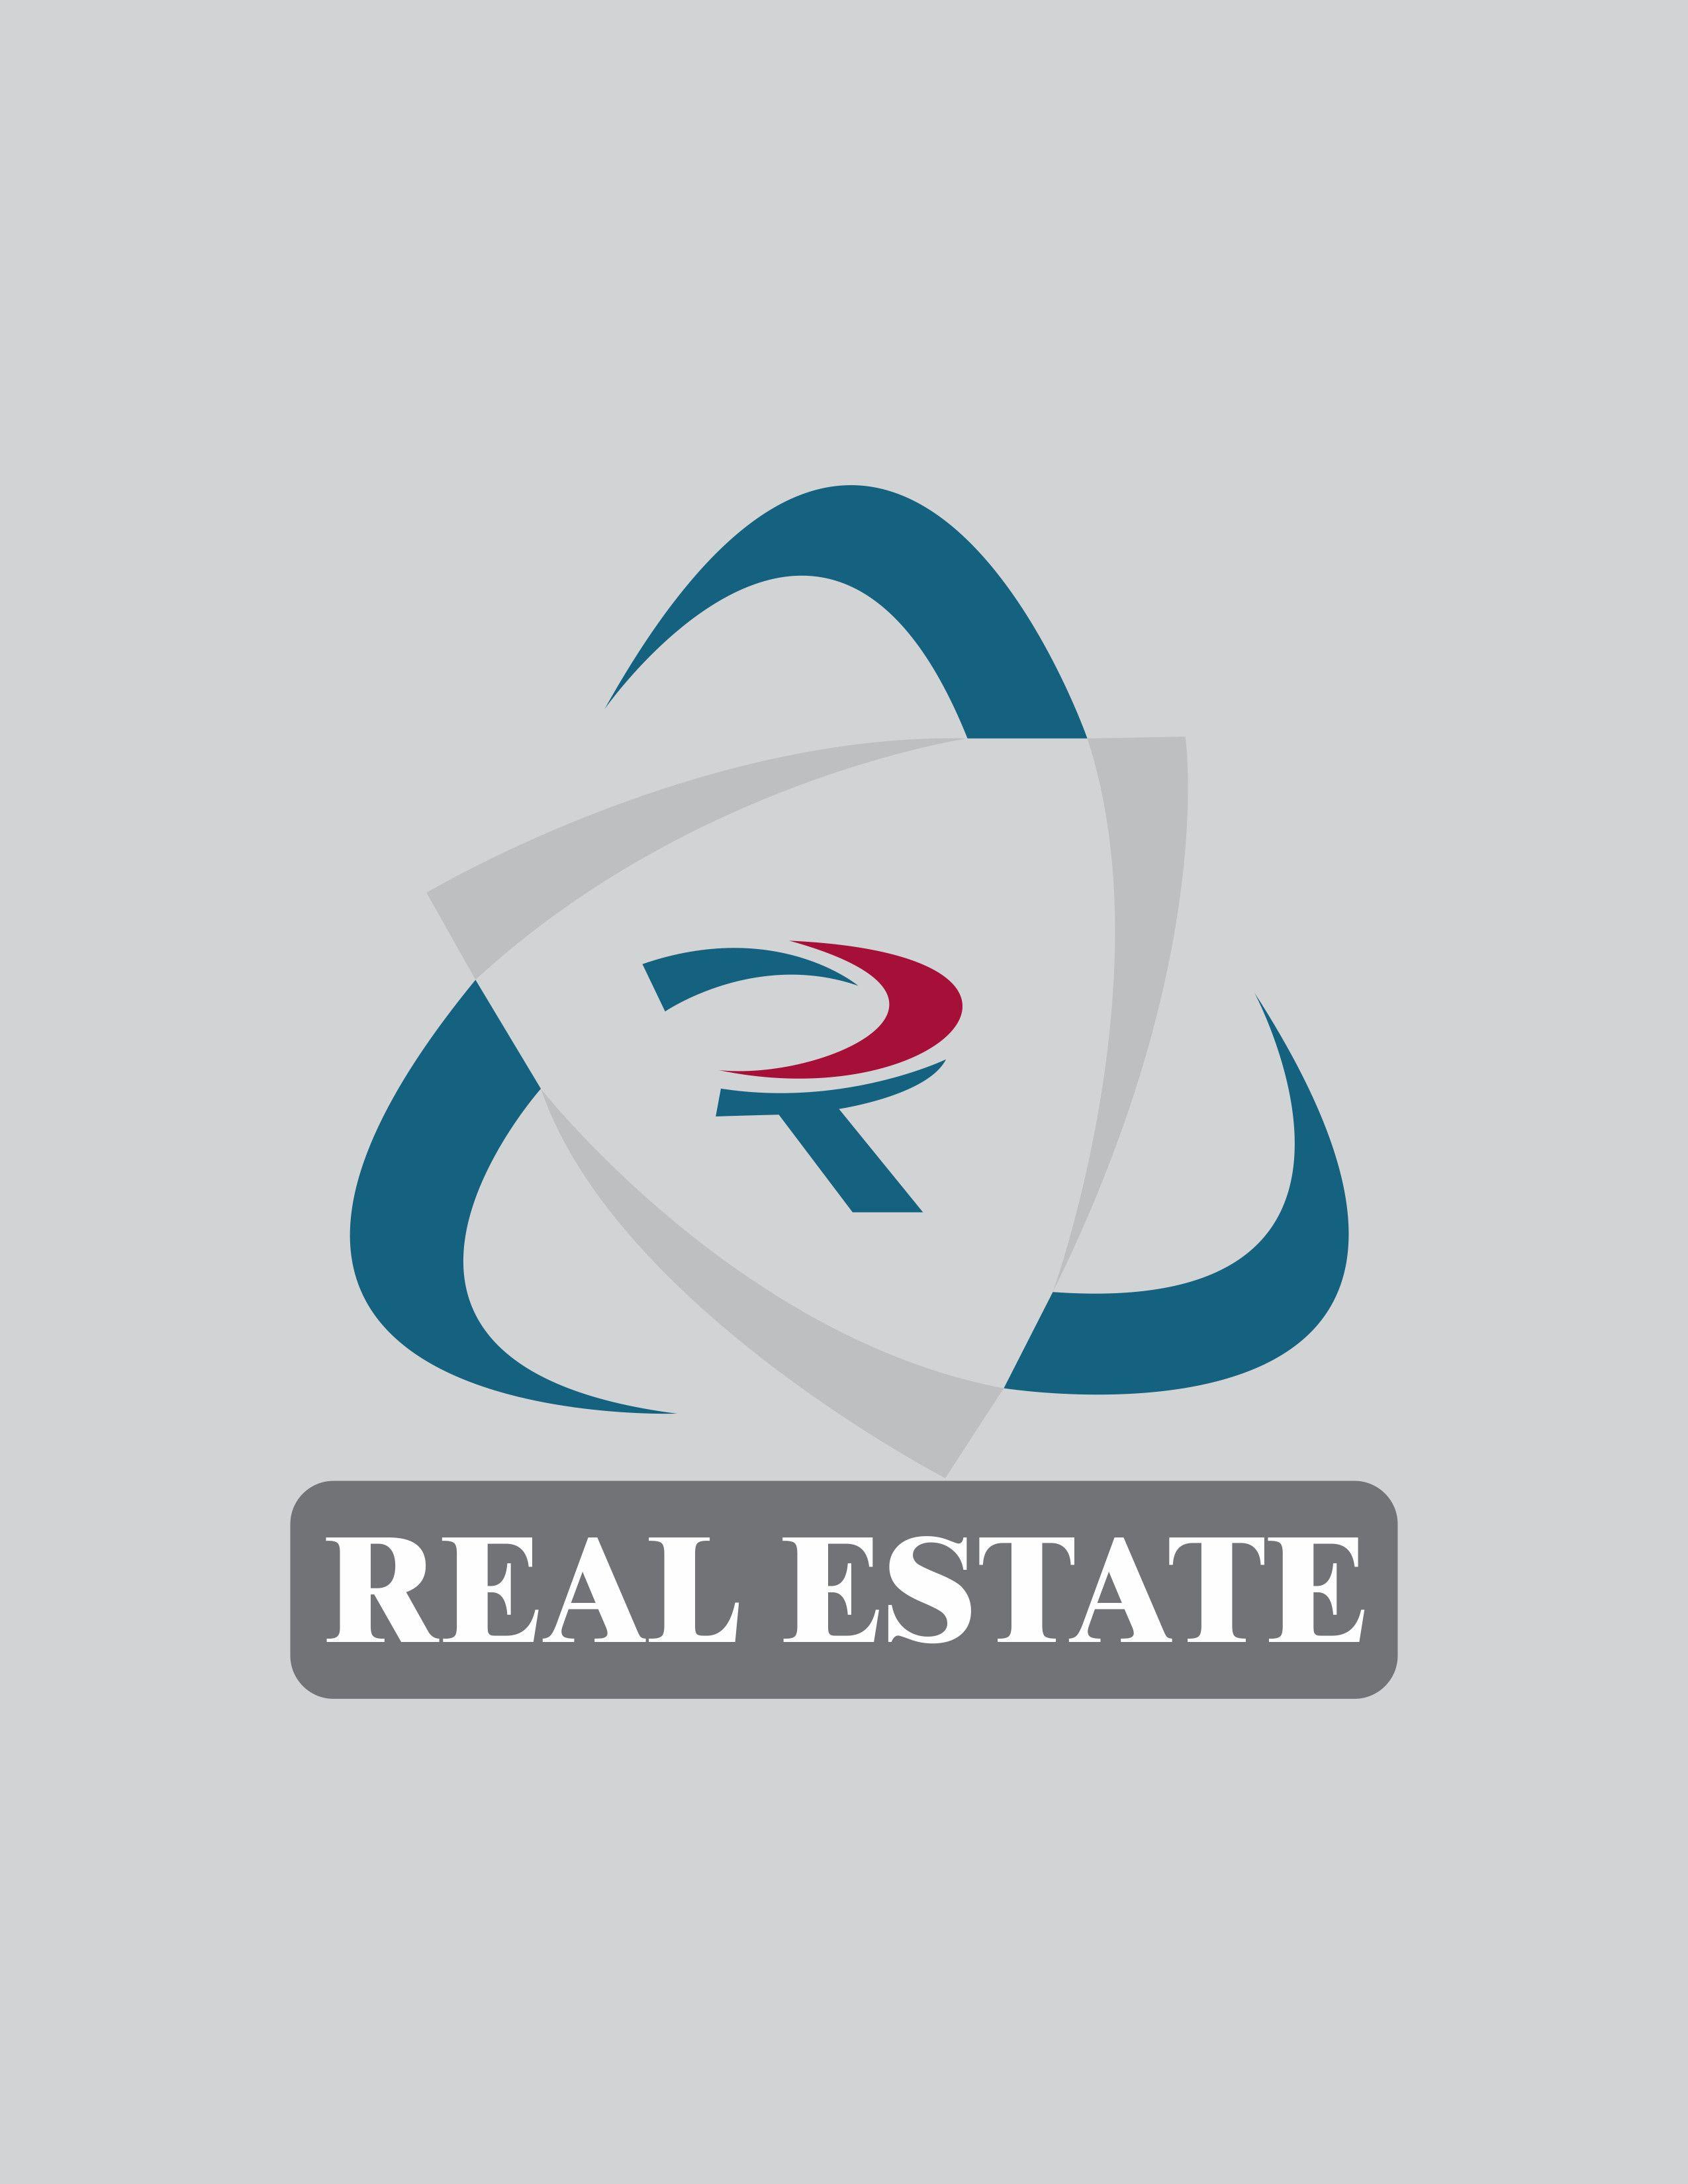 Cdr Logo - Awesome Real Estate Logo Design CDR